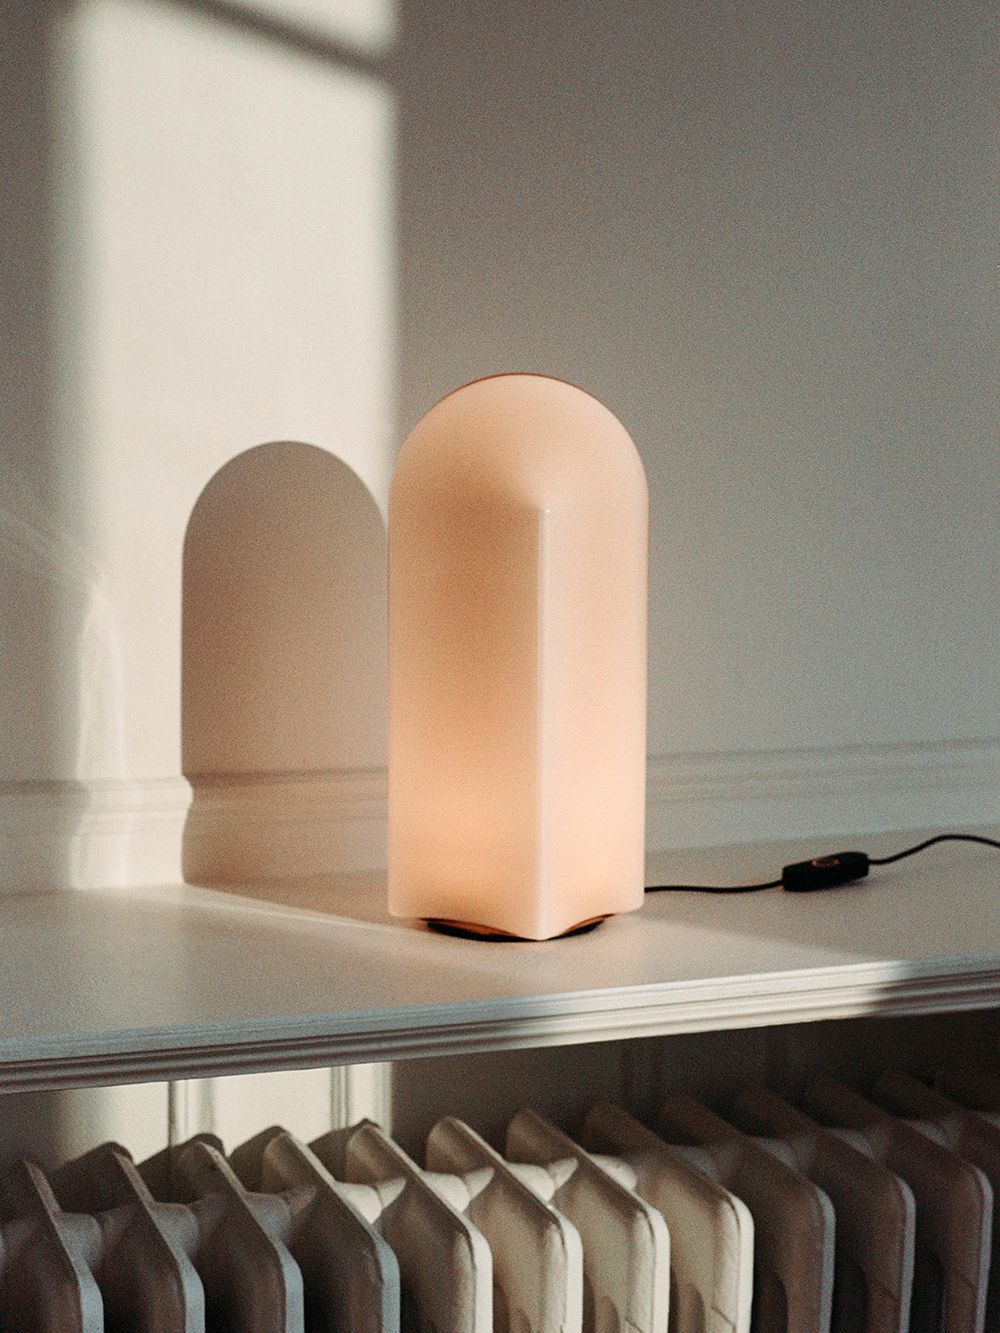 HAY Parade table lamp 160, blush pink